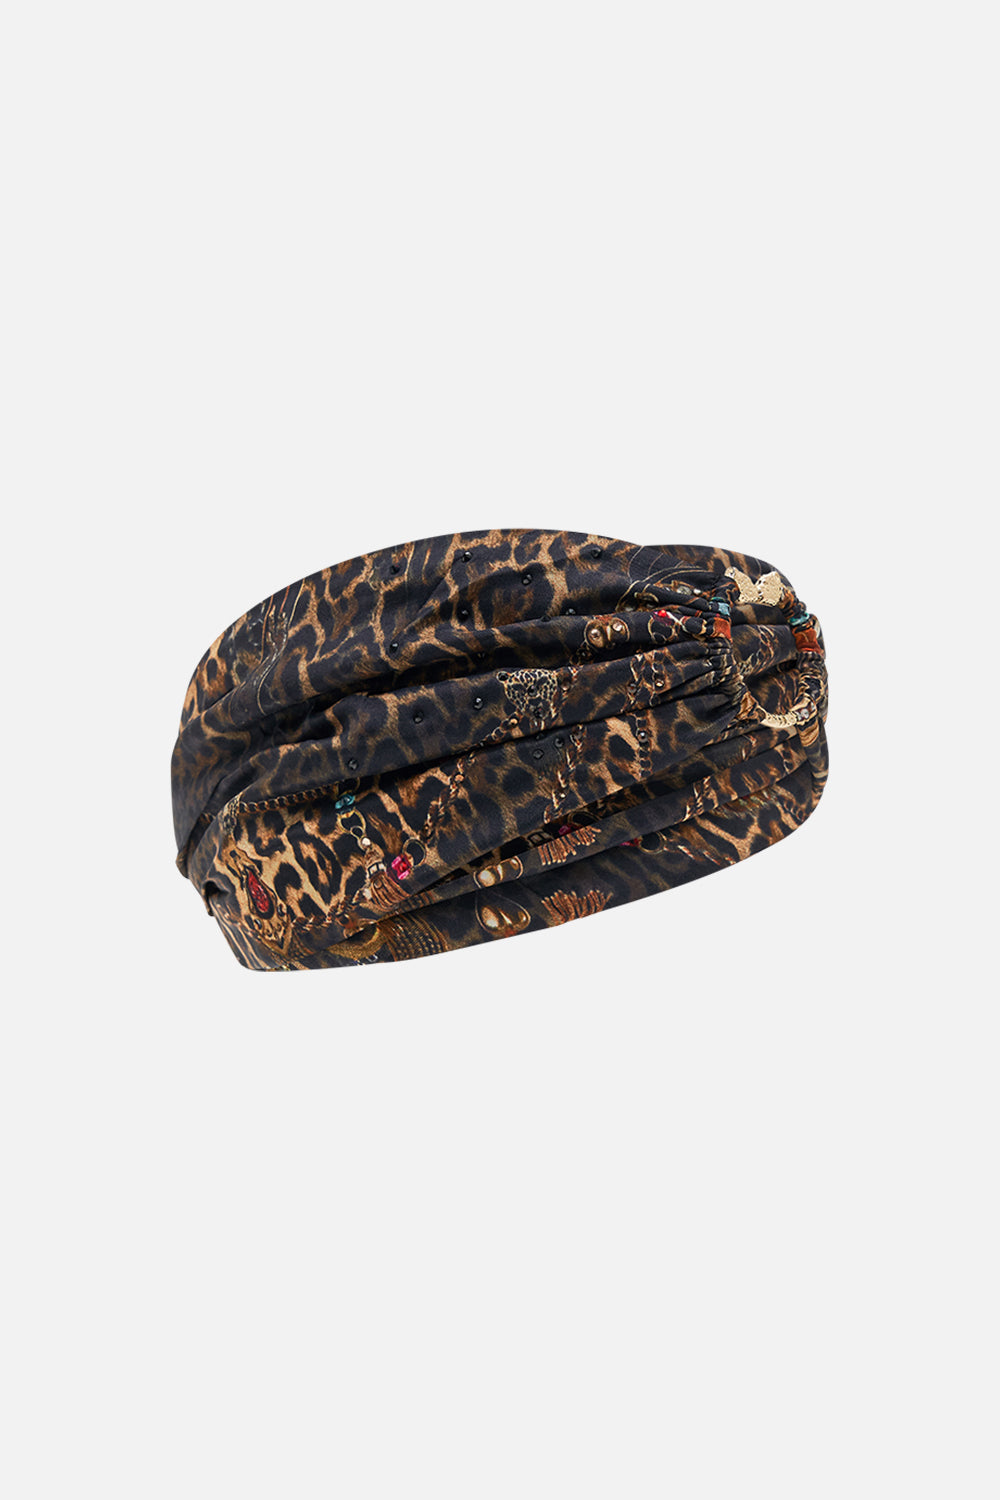 CAMILLA leopard ring headband in Amsterglam